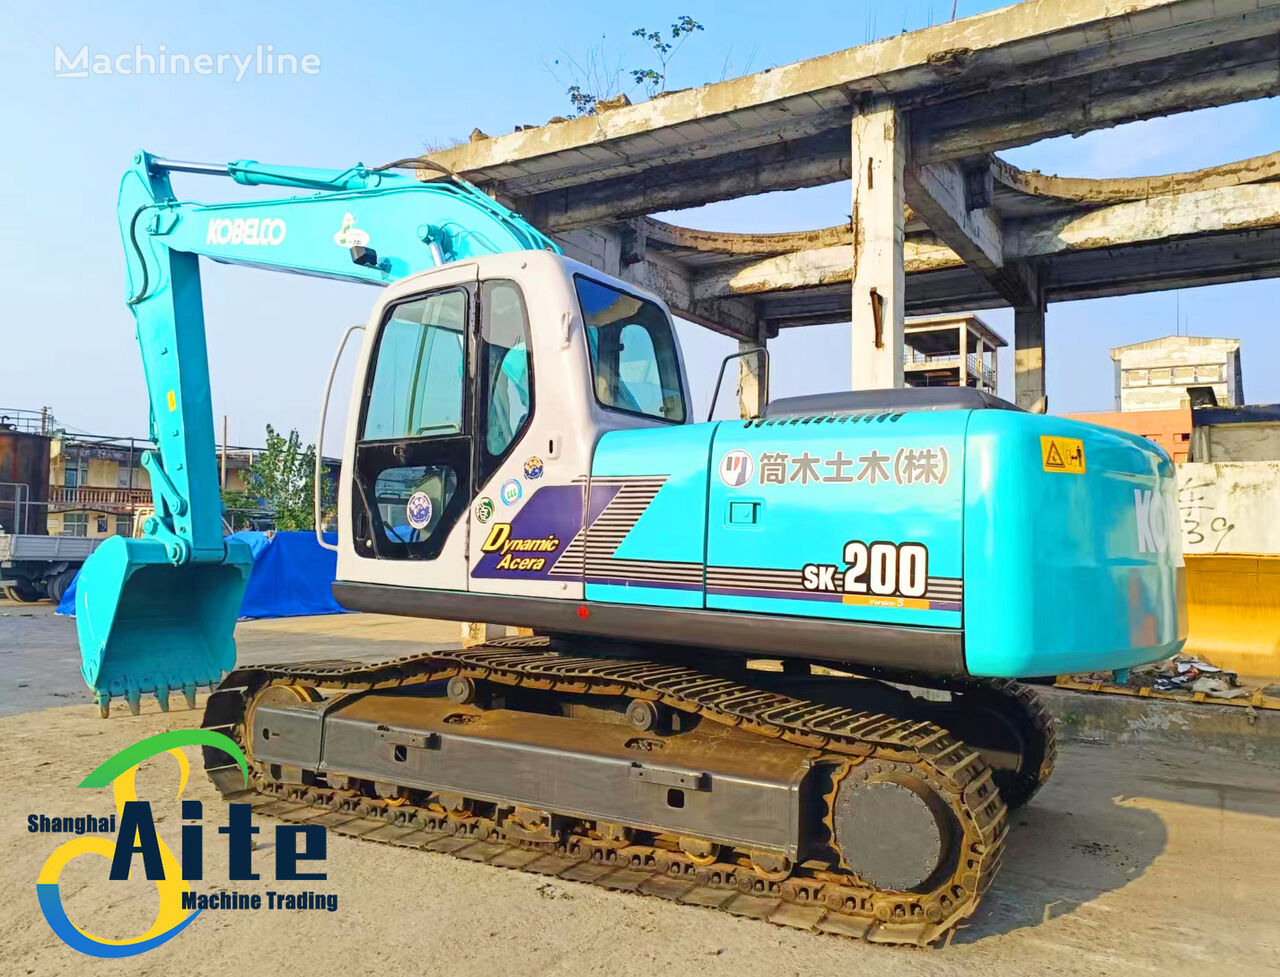 Kobelco SK200 tracked excavator for sale China Shanghai, FD37762